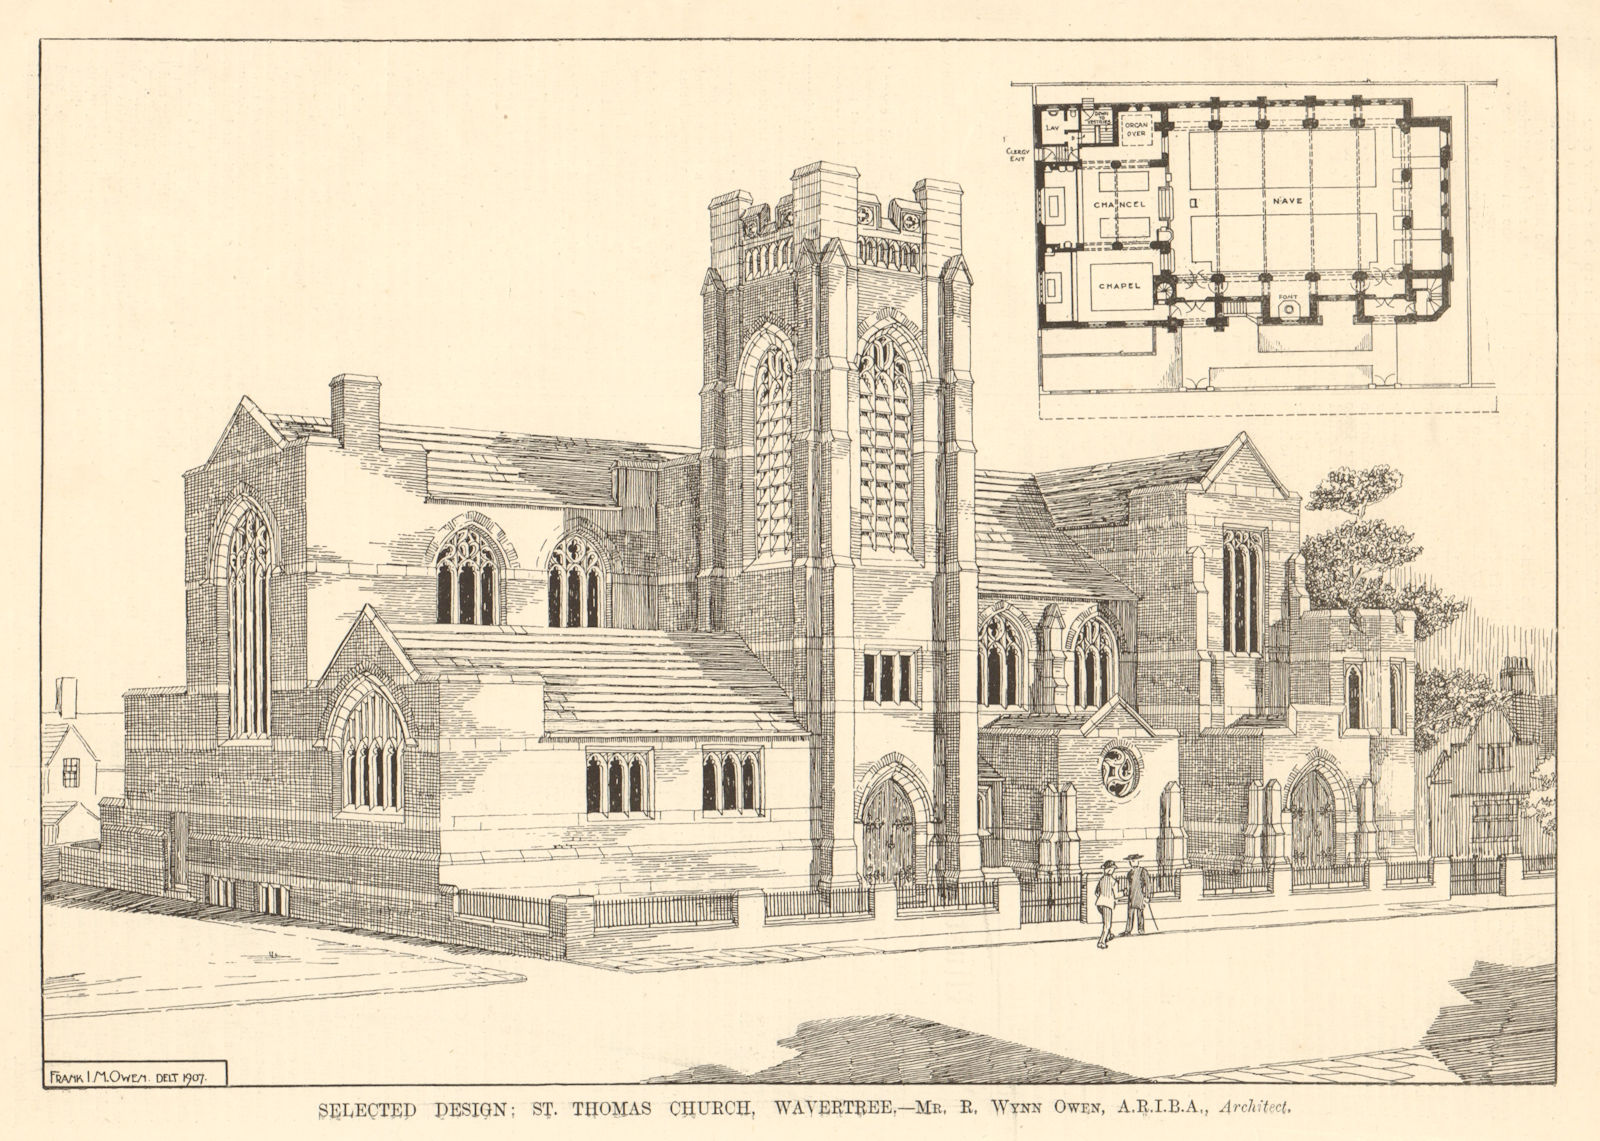 Associate Product St Thomas Church, Wavertree. R. Wynn Owen, ARIBA, Architect. Lancashire 1907